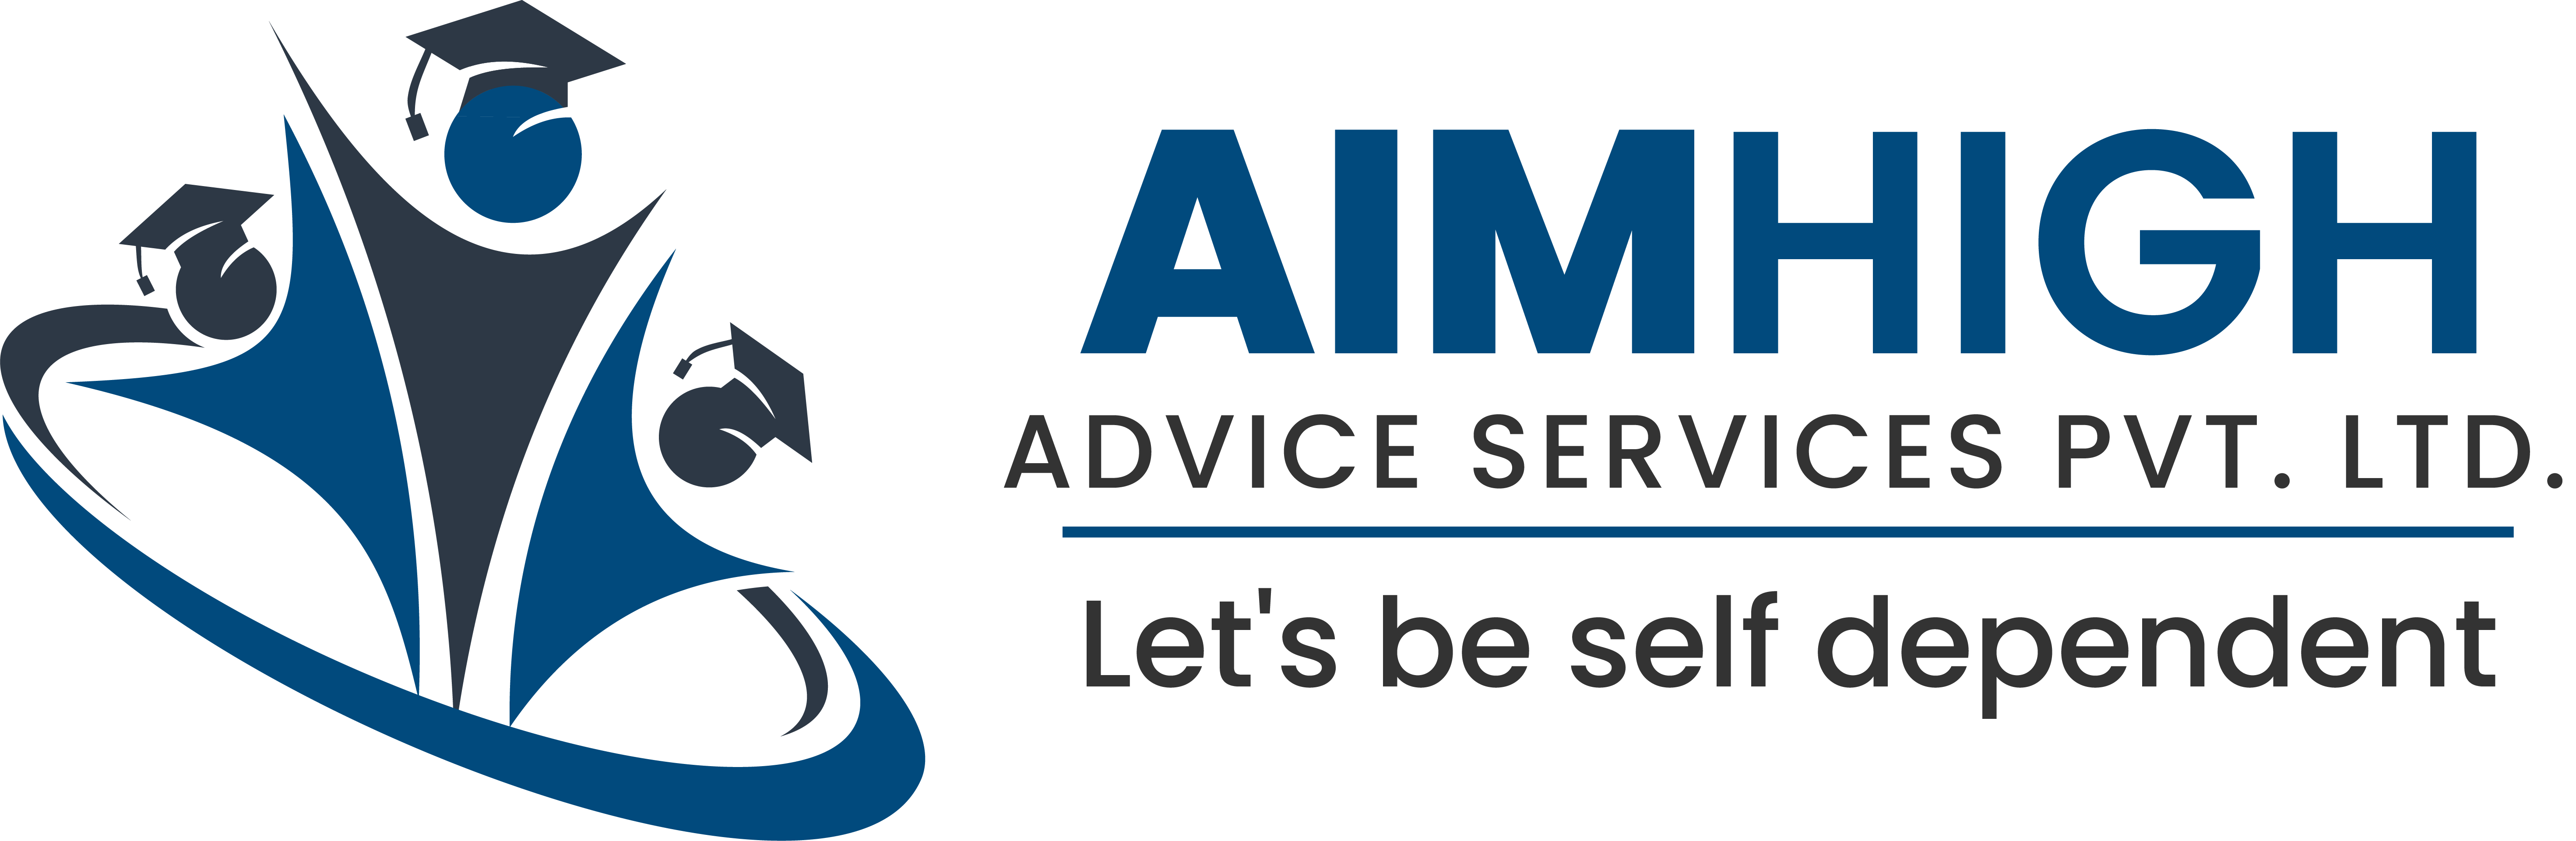 Aim High Advice Services Pvt. Ltd.